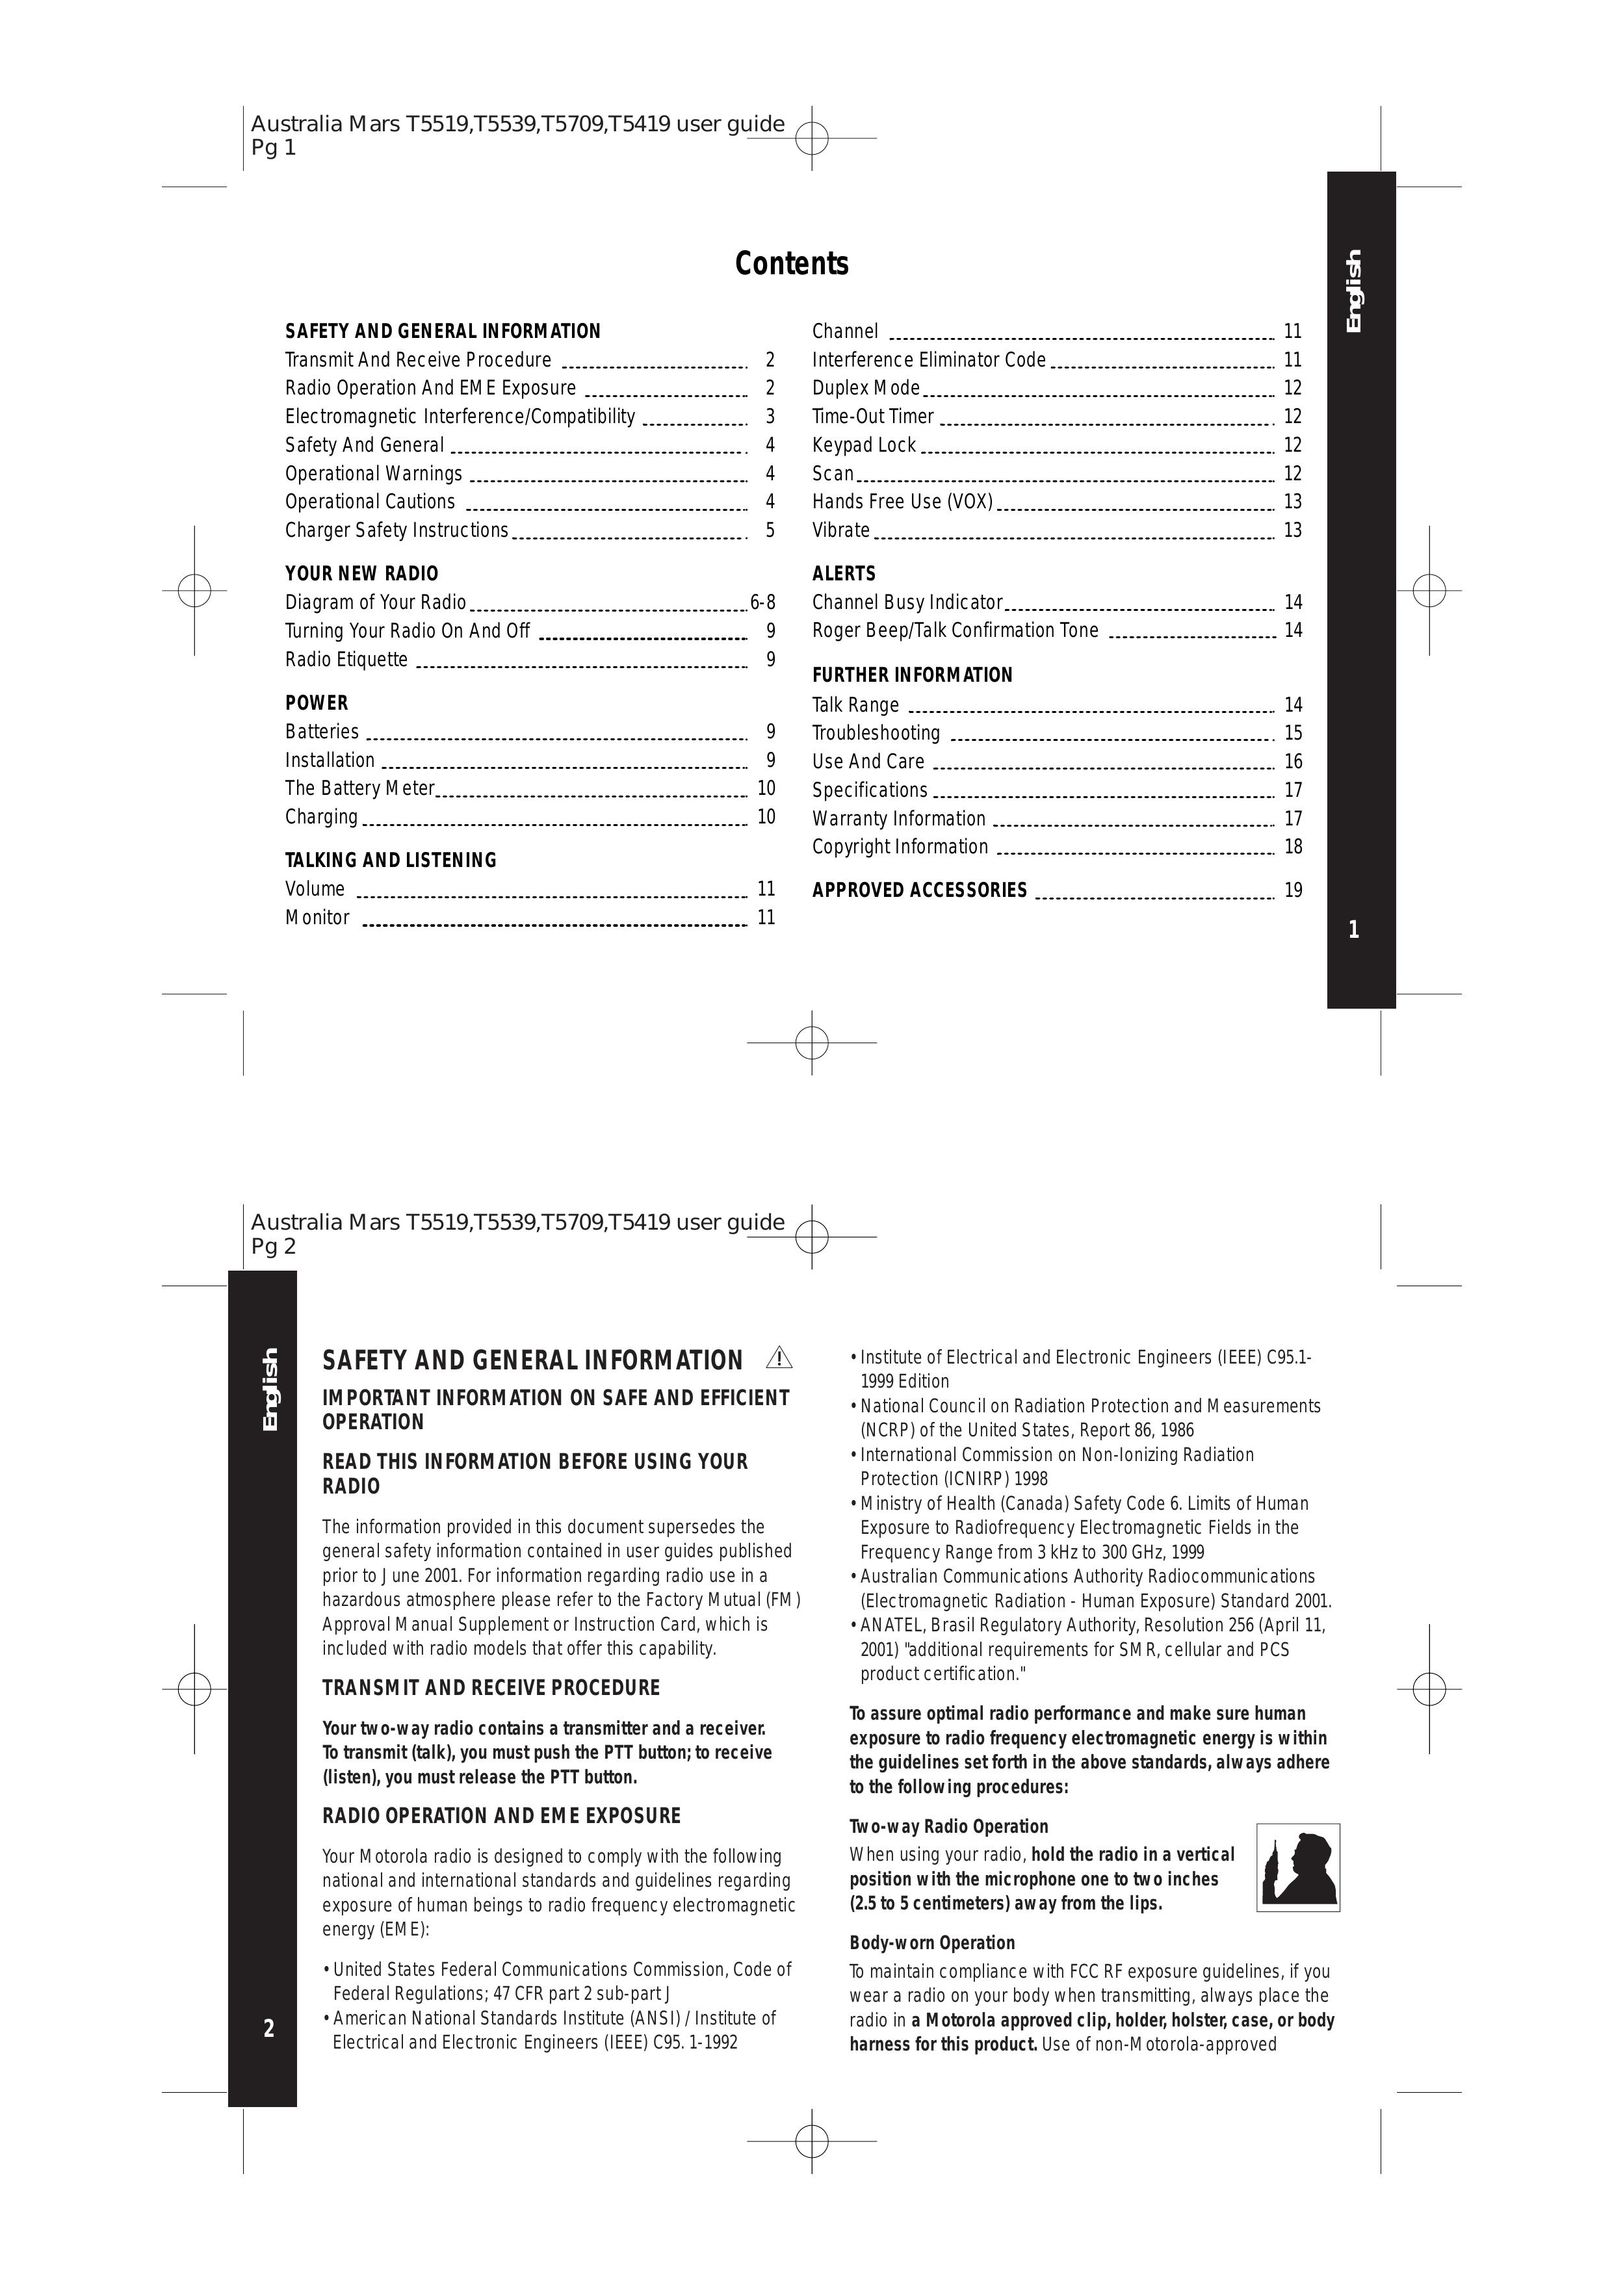 Oricom T5709 Radio User Manual